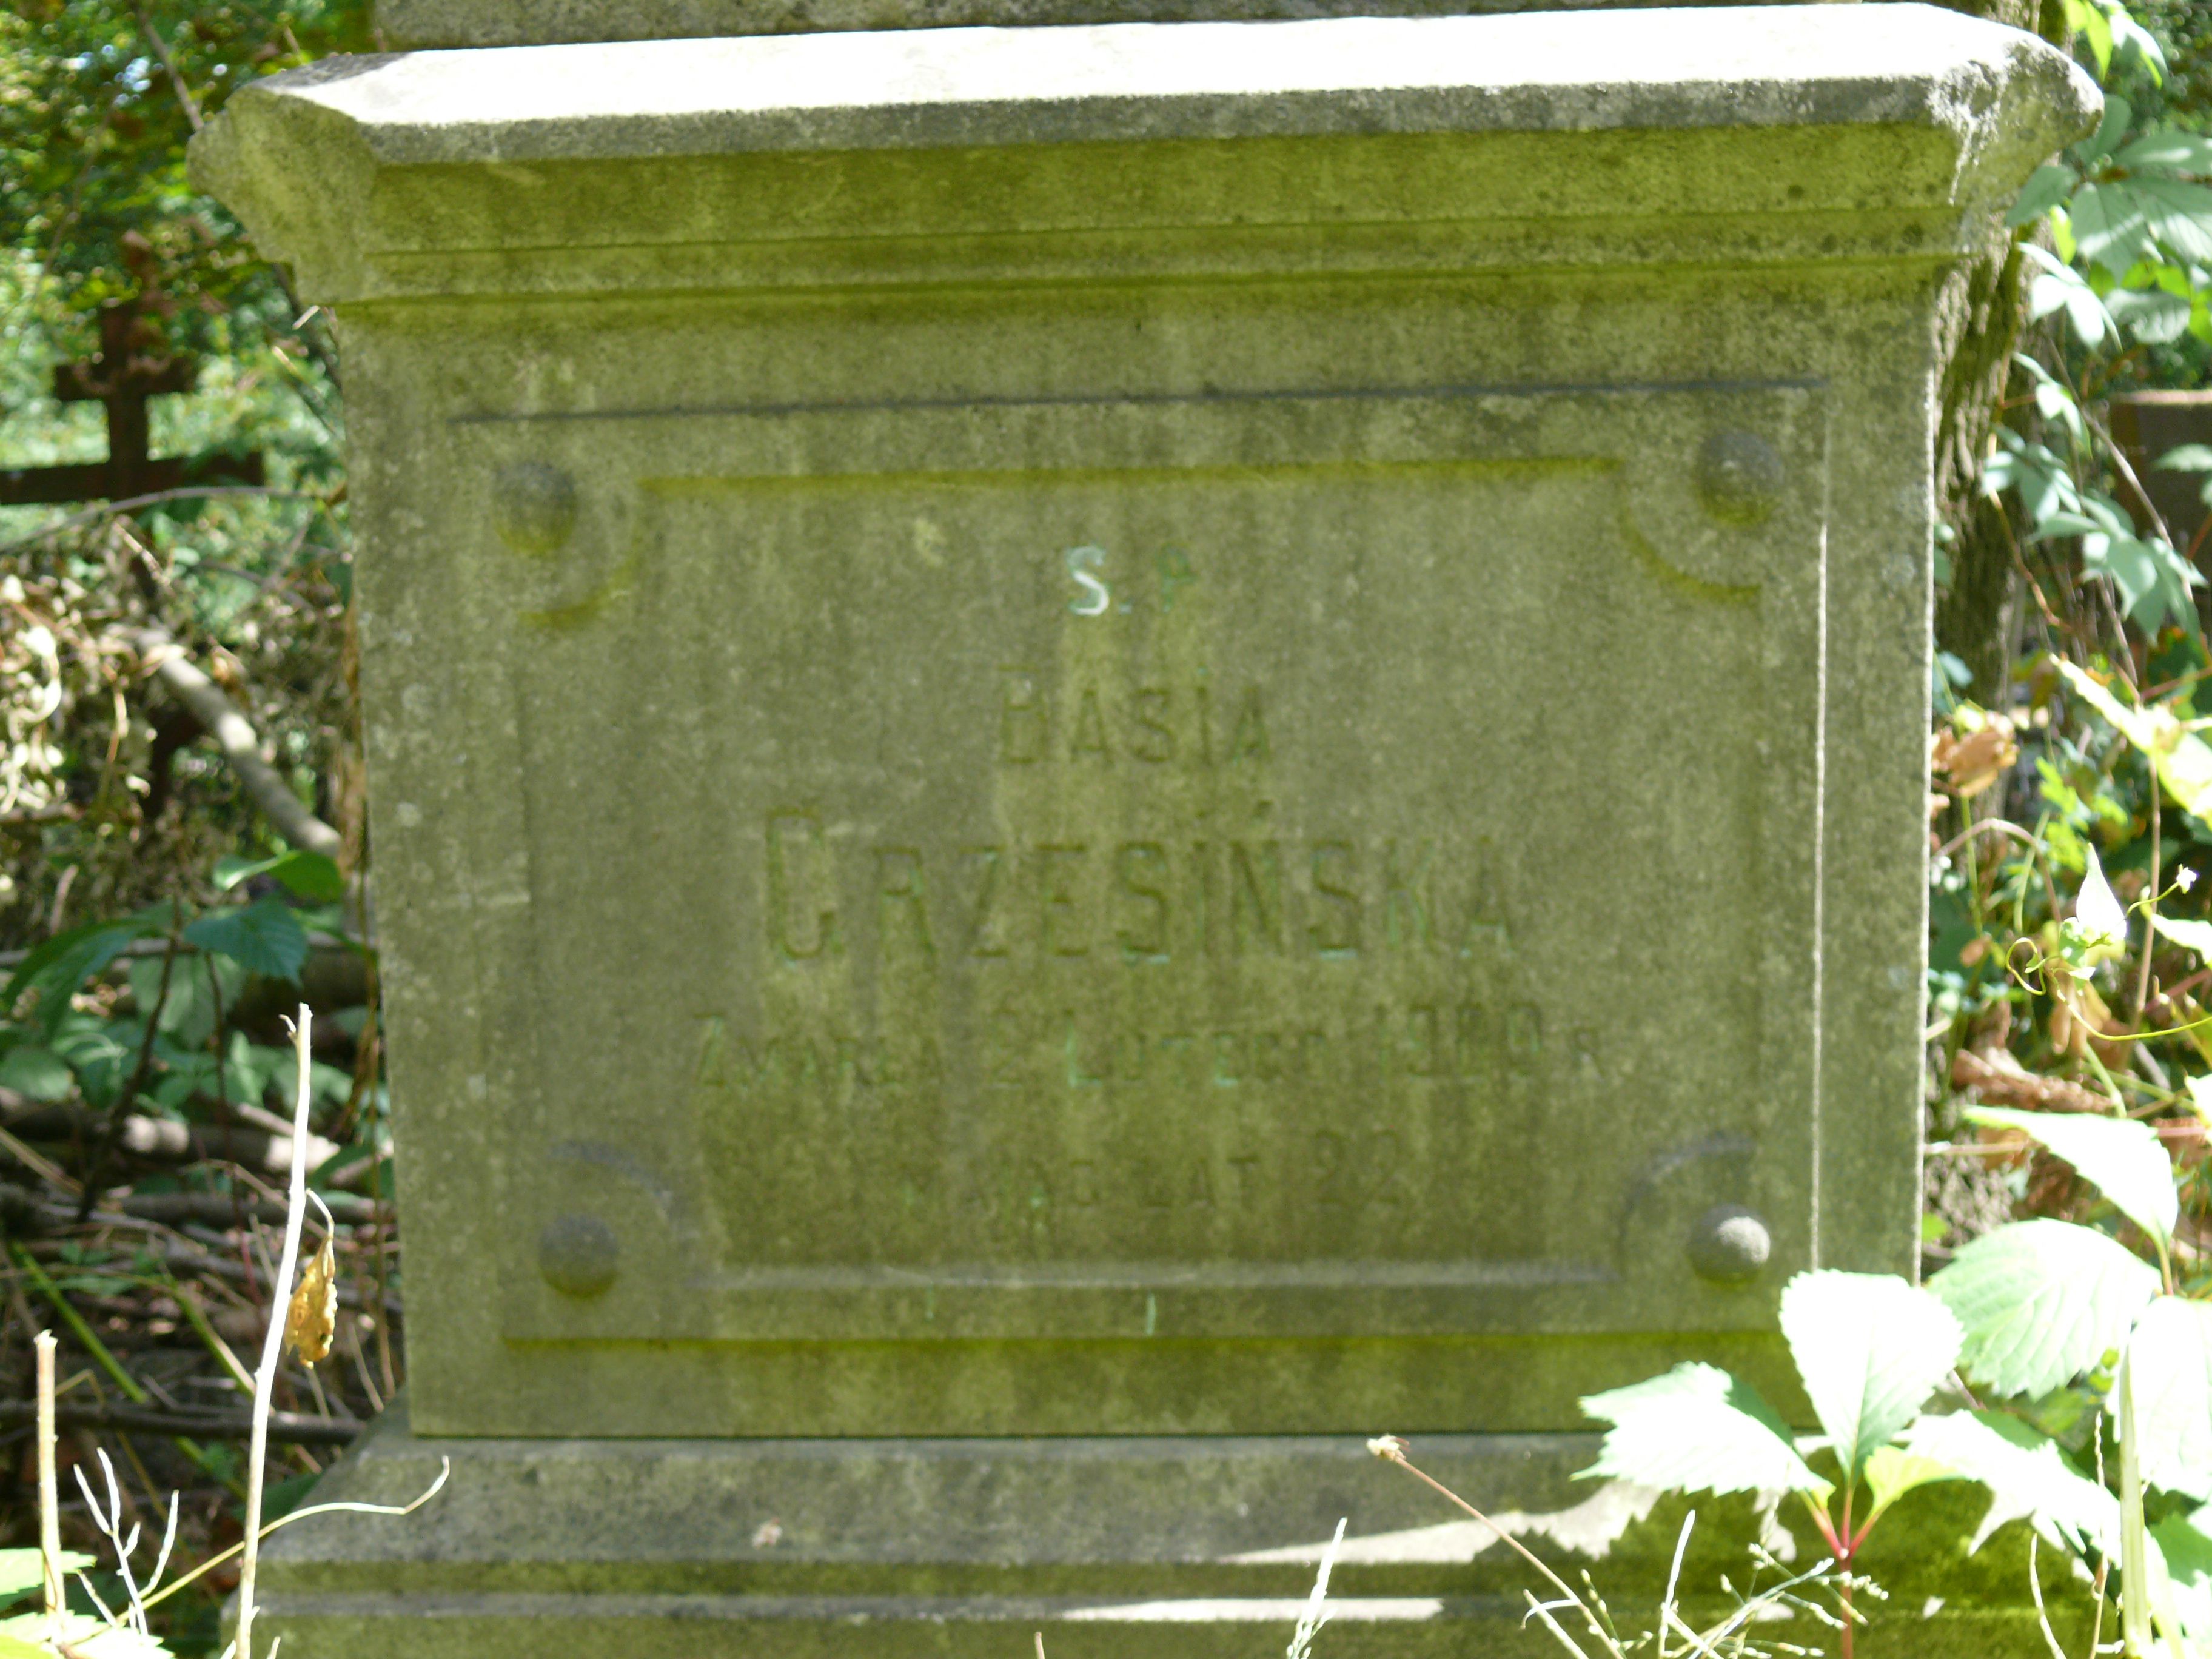 Gravestone inscription Gravestone of Barbara Grzesińska